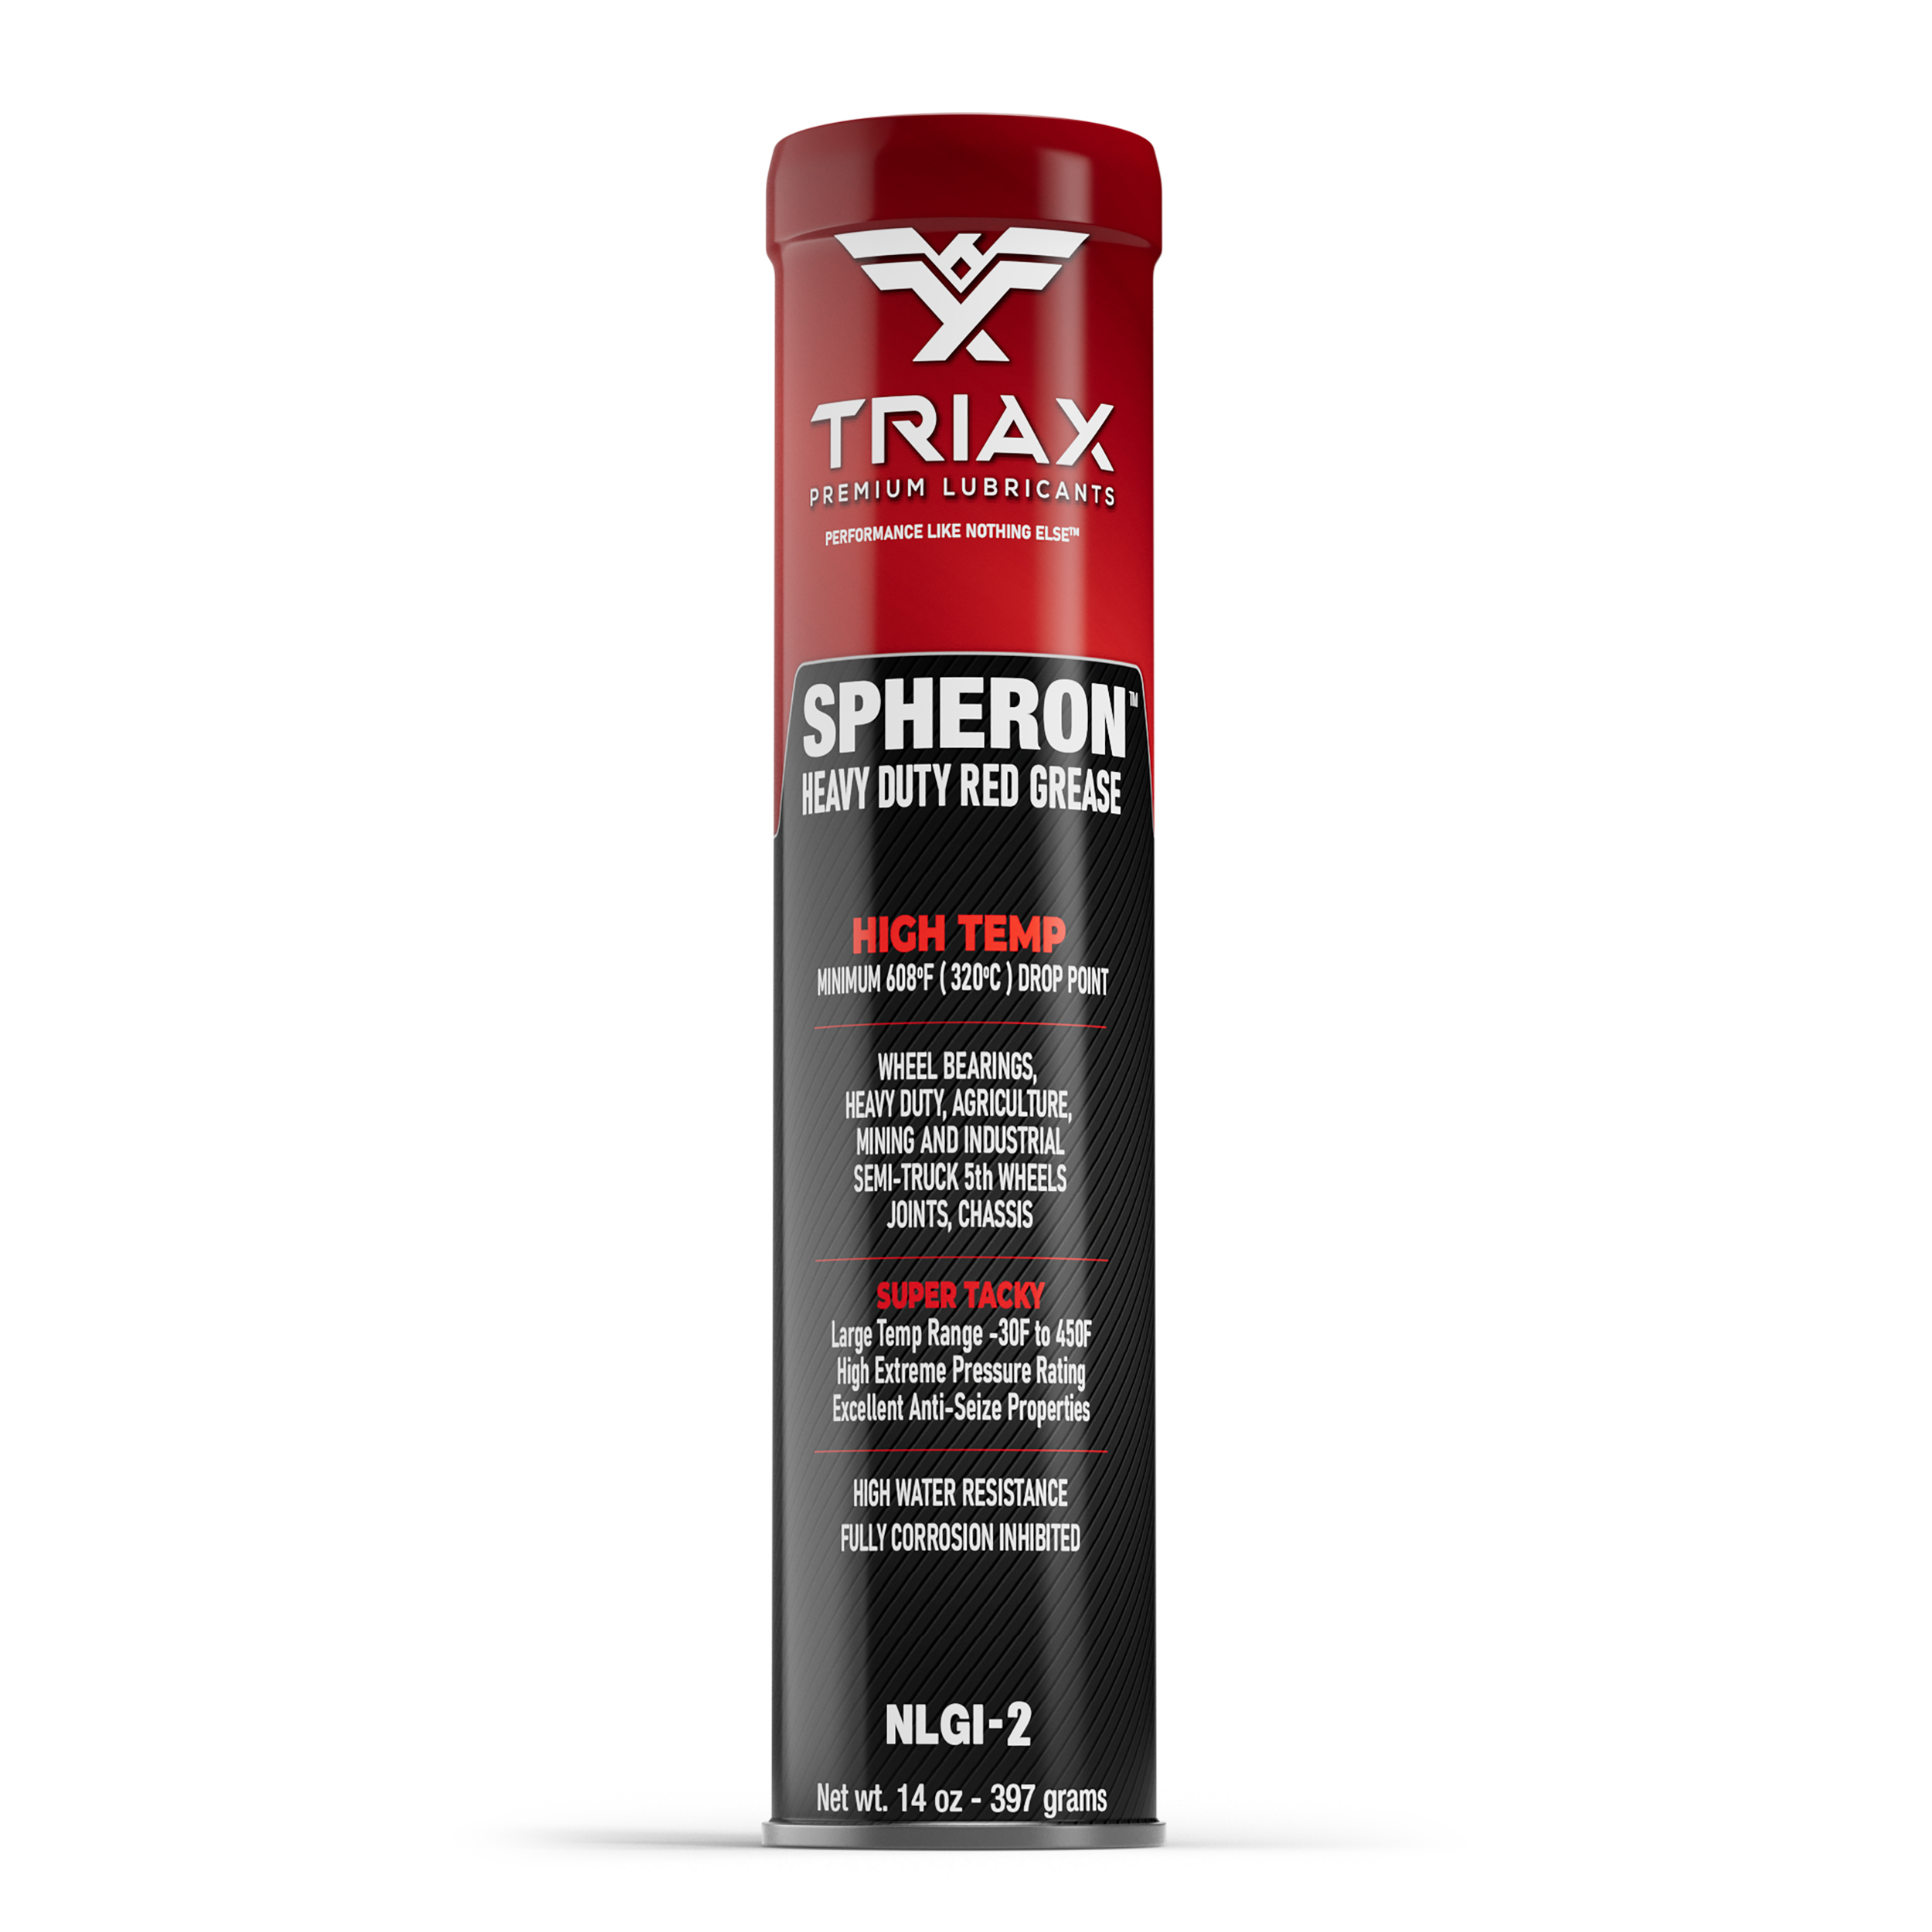 TRIAX Spheron HT-2 (Vaselina de Rulmenti 330 C) High Temp Grease